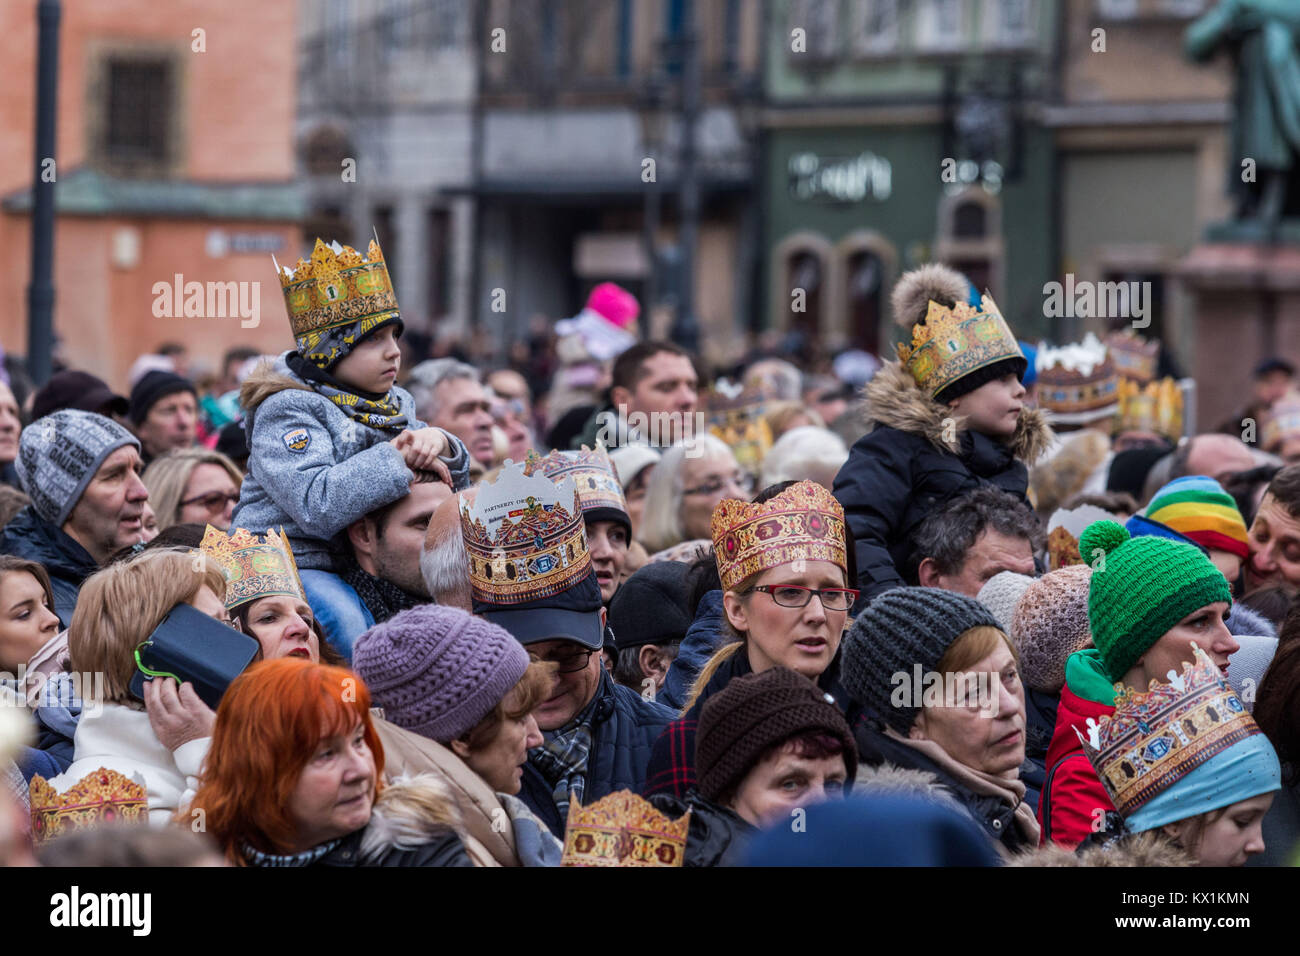 Wroclaw, Poland 6th January 2018 The Procession of the Magi - the catholic Feast of the Epiphany in Wroclaw Krzysztof Kaniewski/Alamy Live News Stock Photo